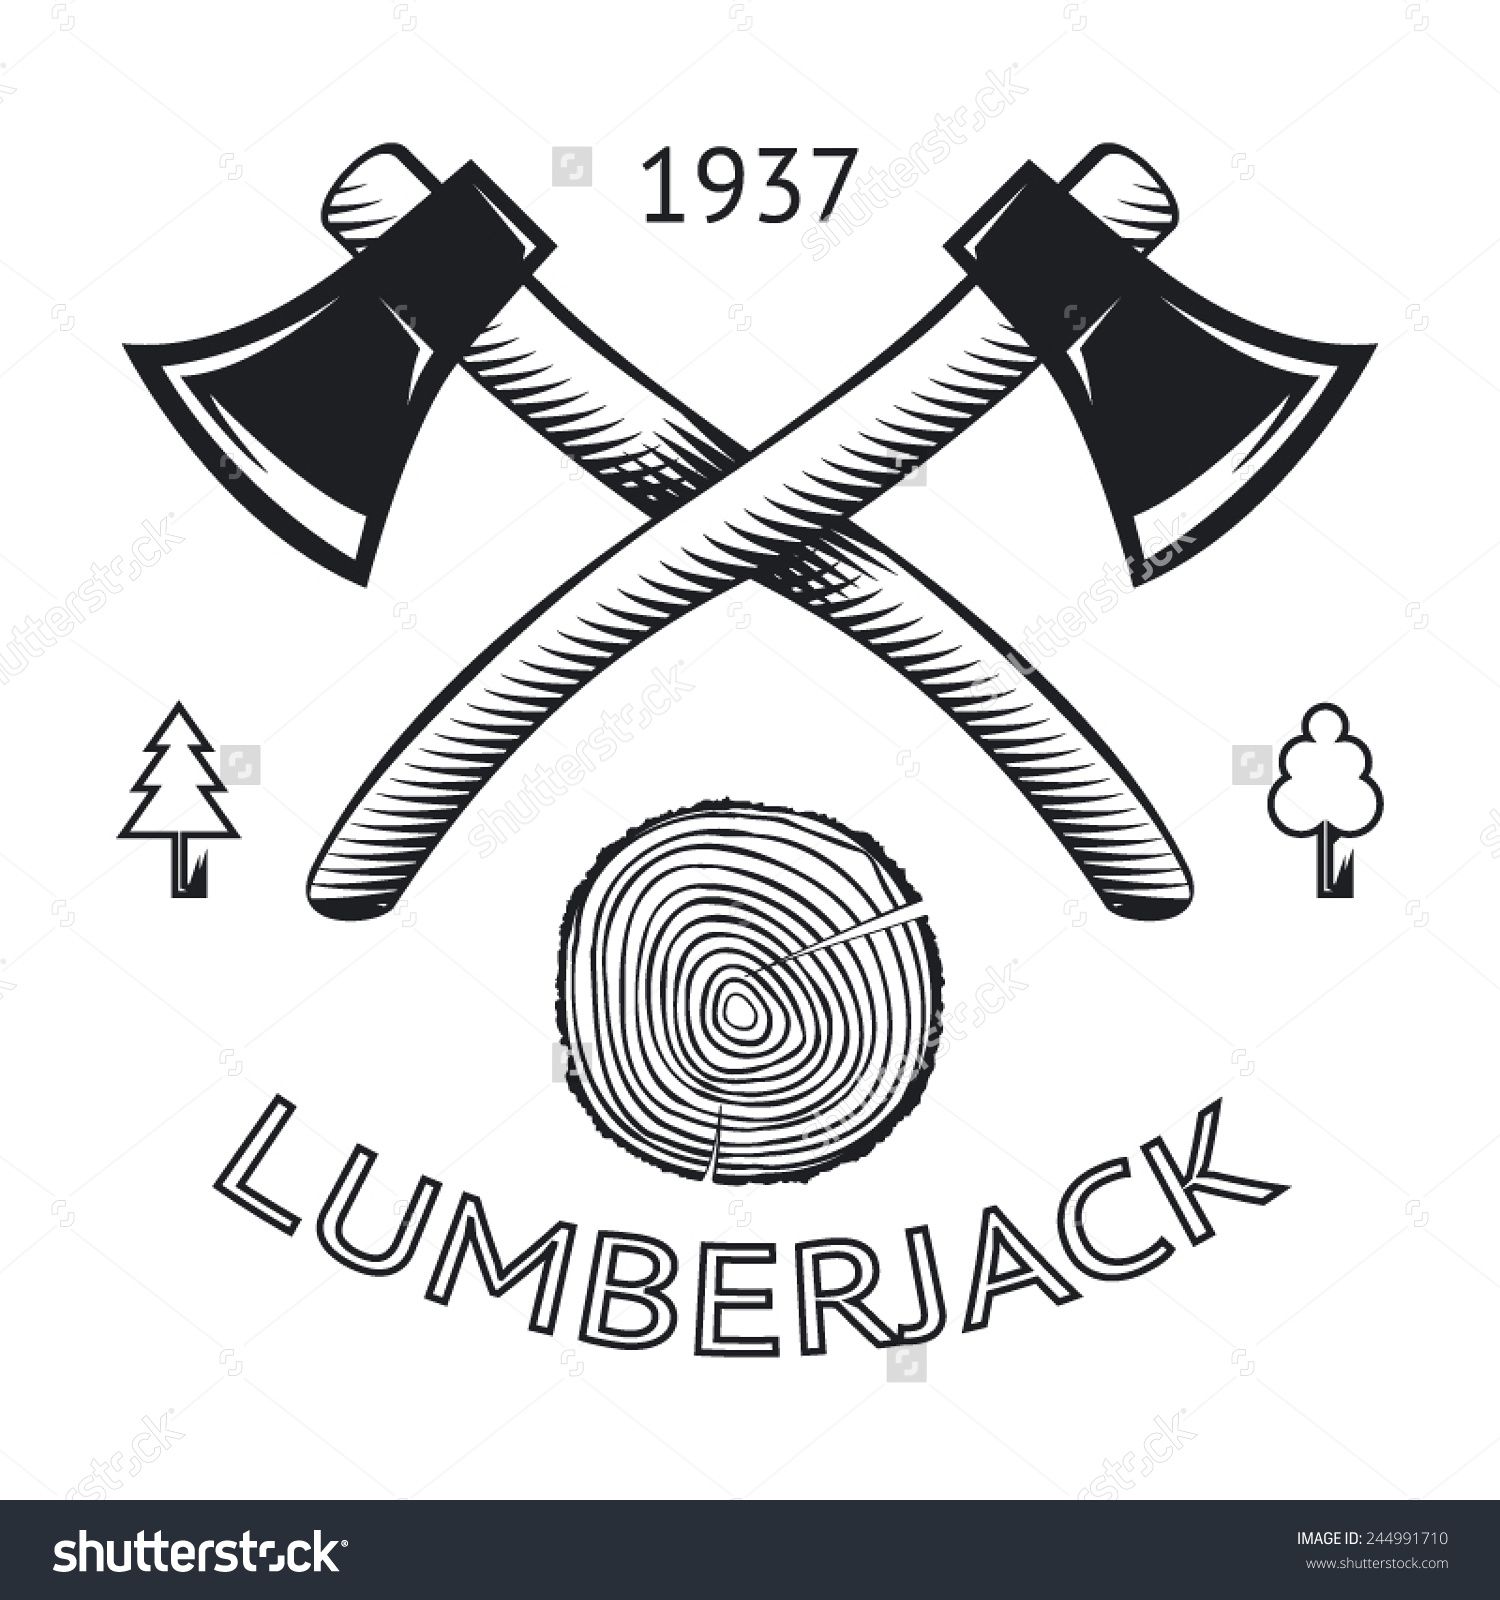 Lumberjack logo symbol hatchet. Ax clipart wood cutter